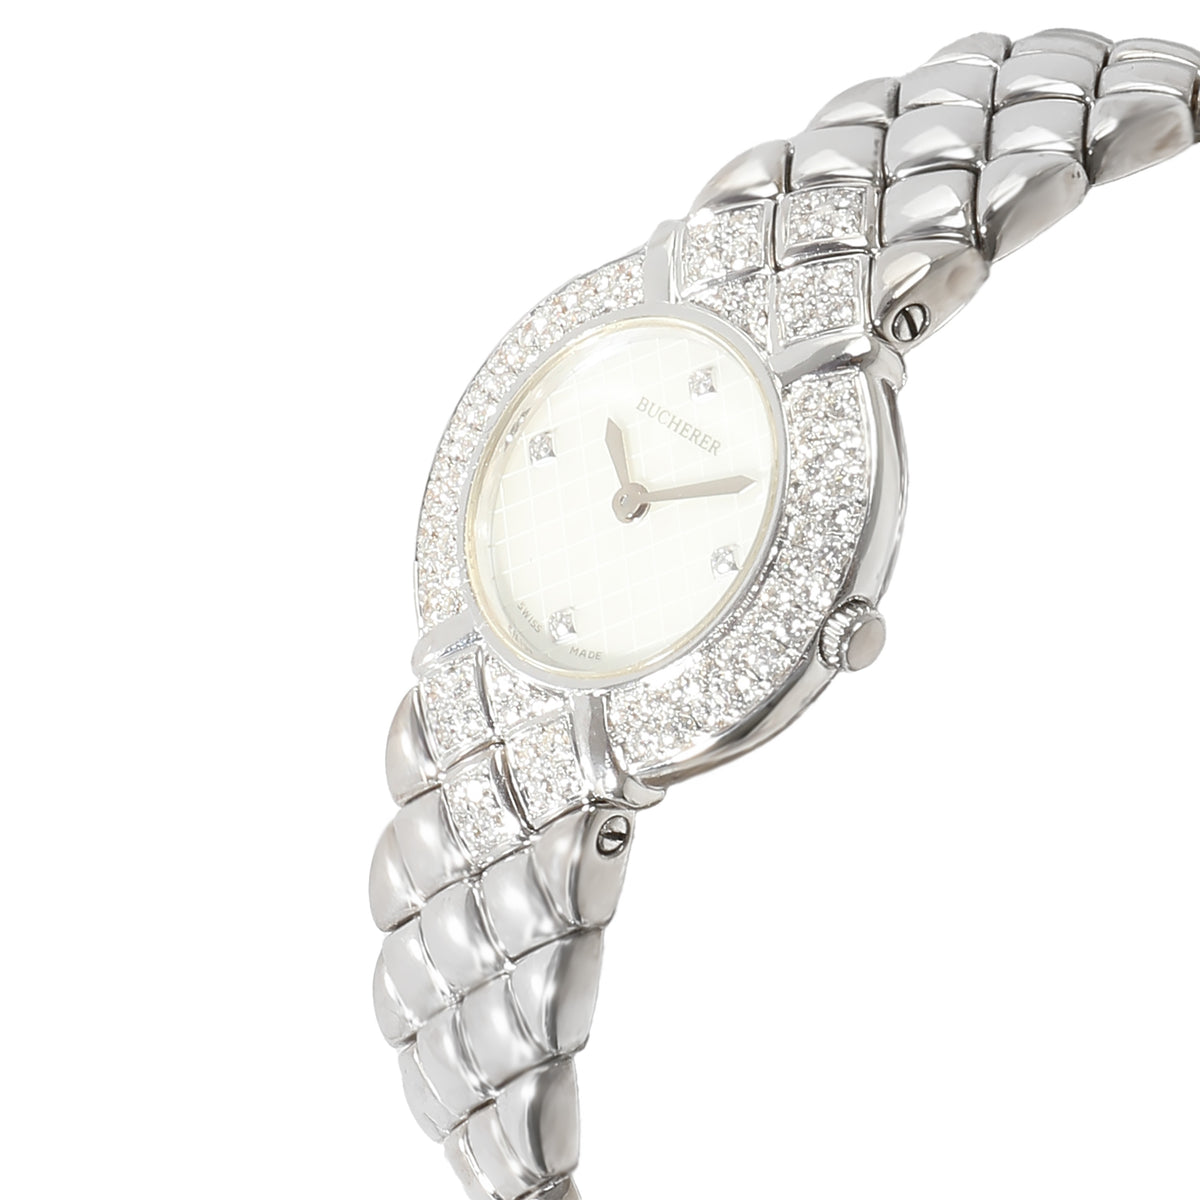 Classique Classique Women's Watch in 18kt White Gold